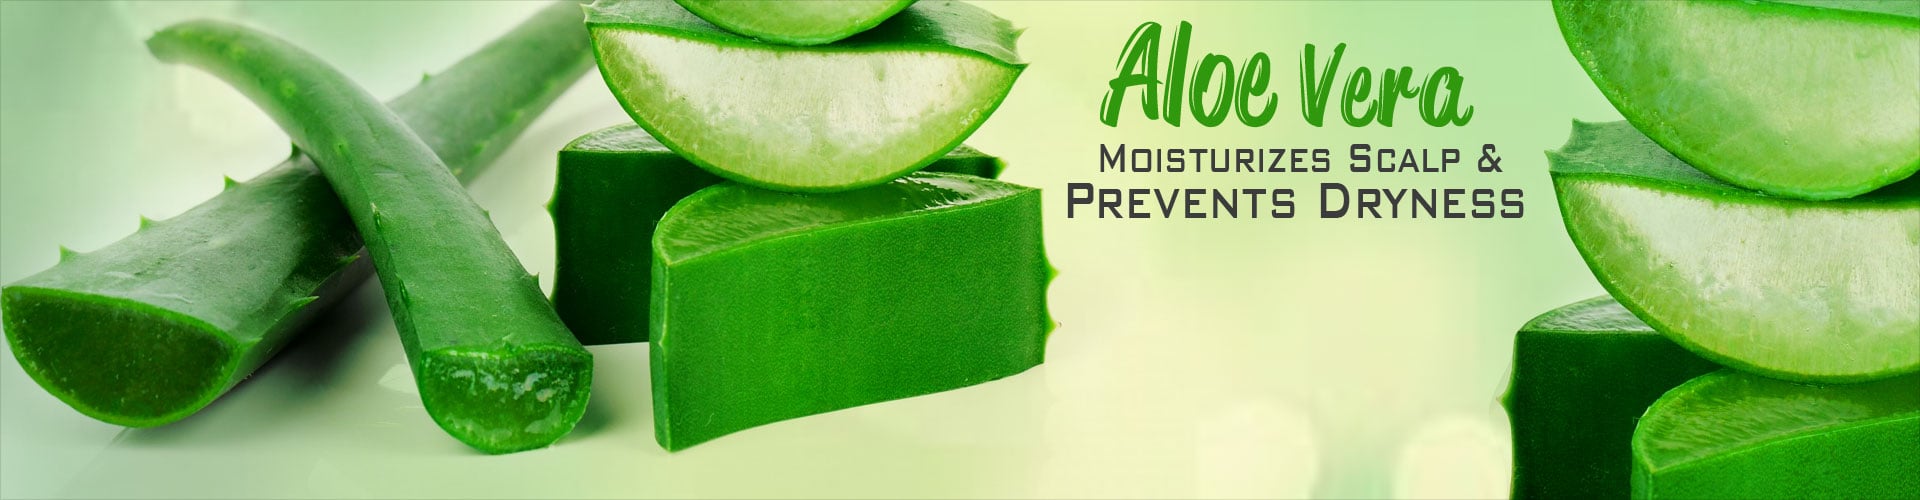 Aloe Vera Moisturizes Scalp & Prevents Dryness